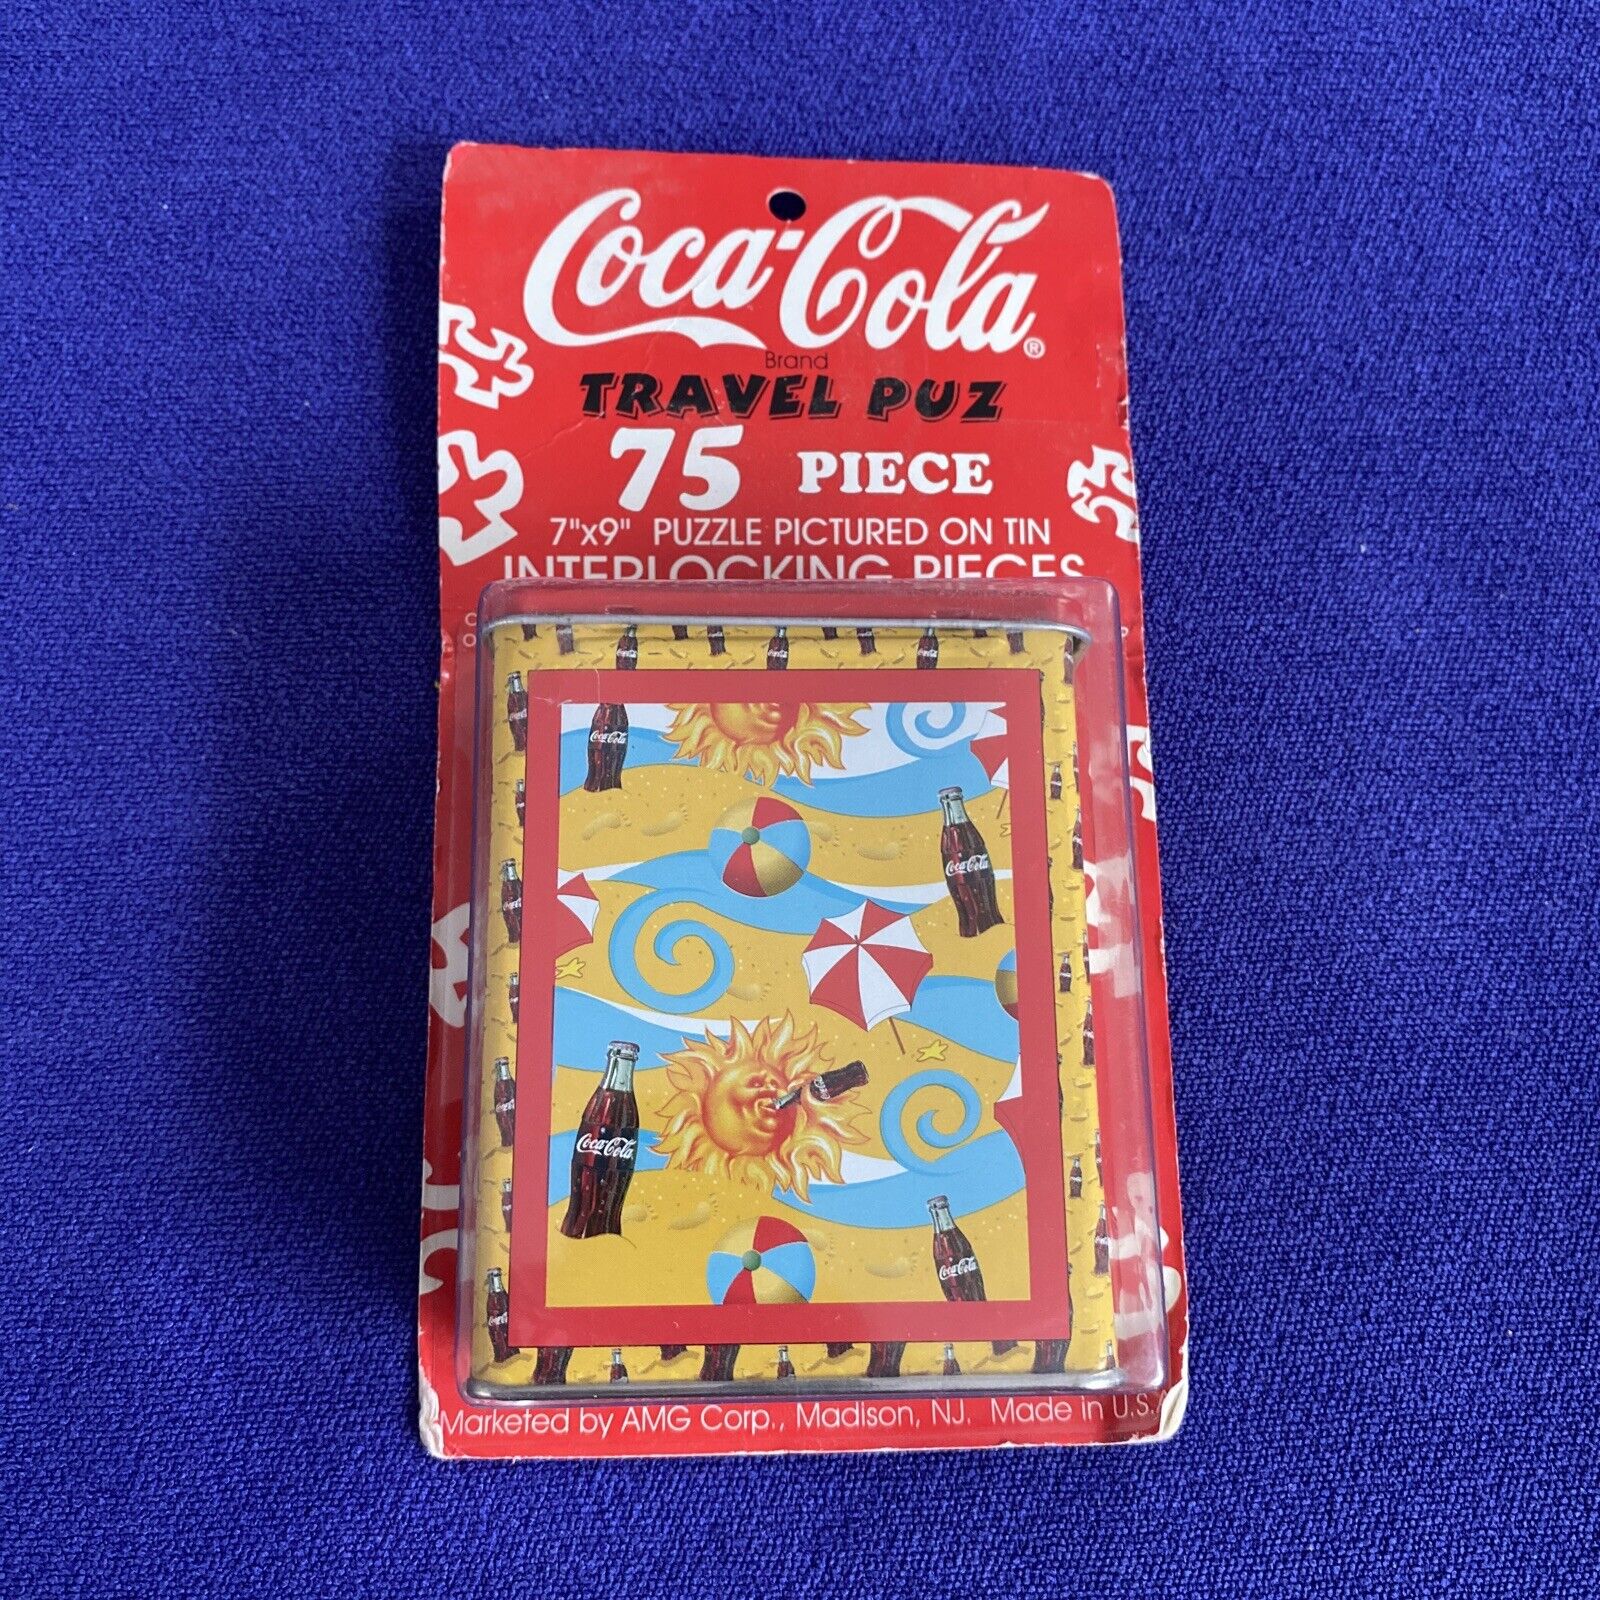 New! Vintage Coca-cola Coke Travel Puzzle 75 Piece - 1999 Factory Sealed 7” X 9”